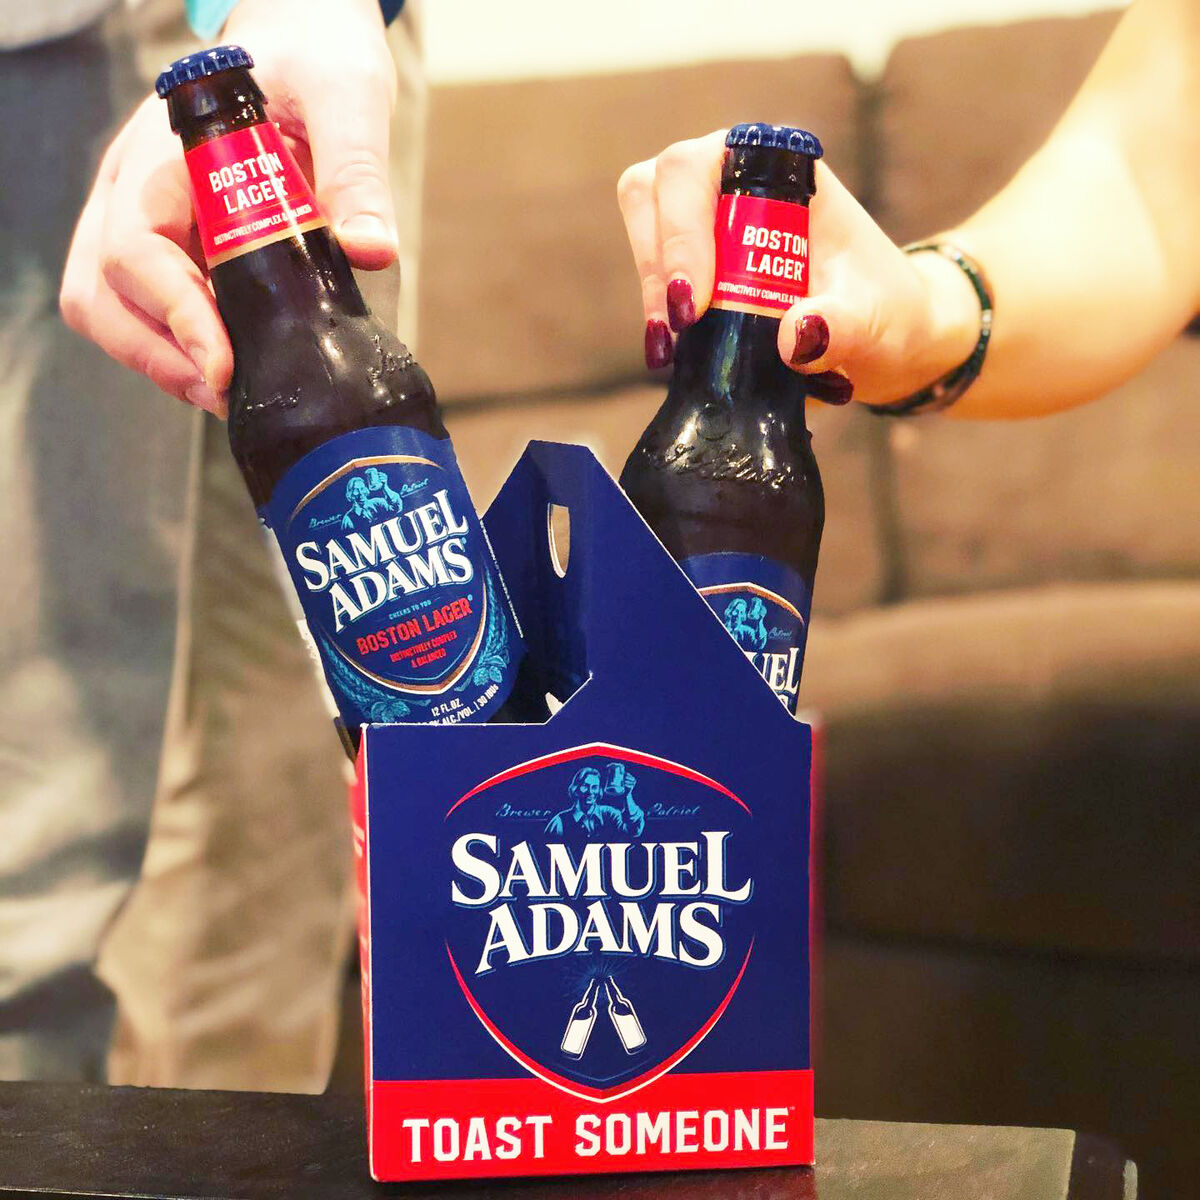 Samuel Adams Boston Lager The Boston Beer Co.